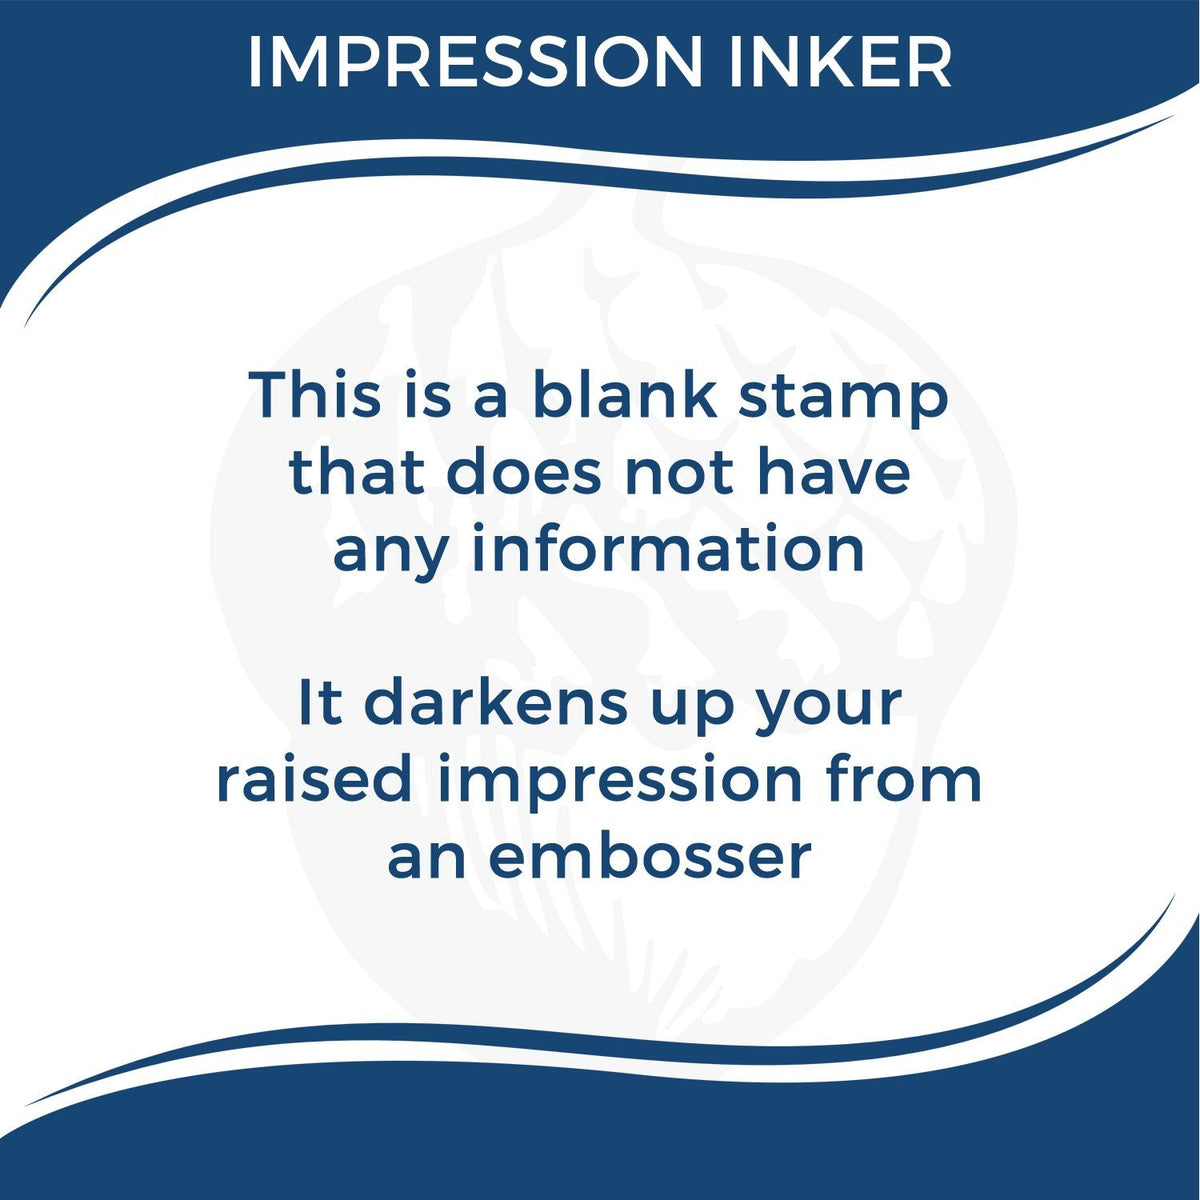 Impression Inker